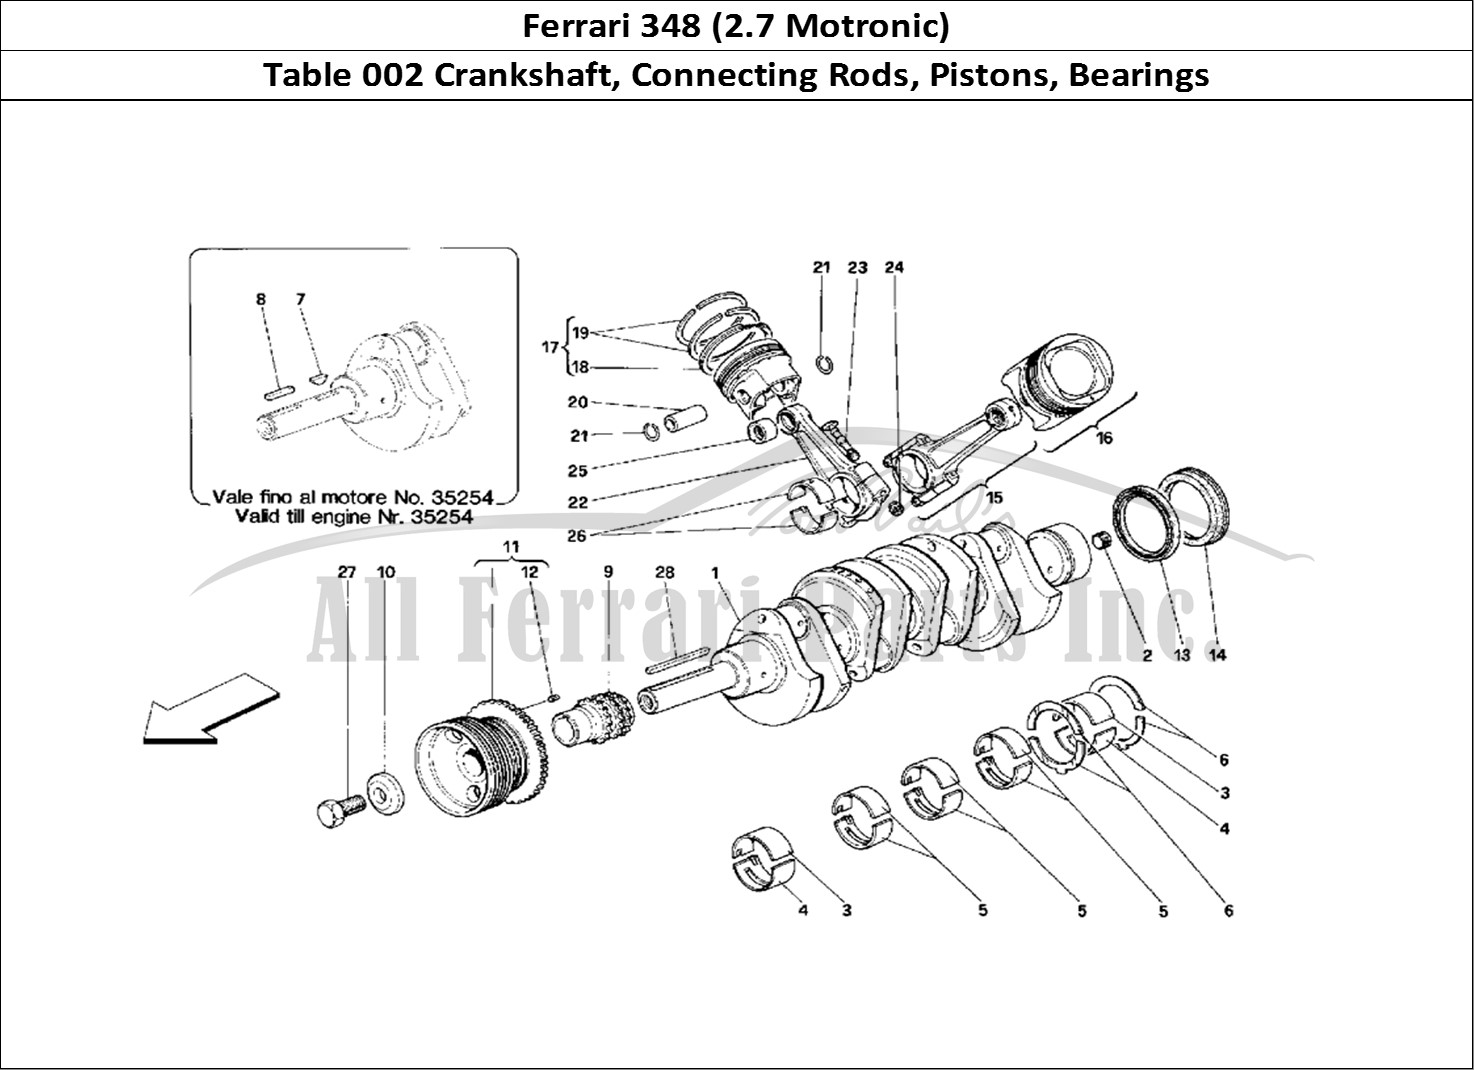 Ferrari Parts Ferrari 348 (2.7 Motronic) Page 002 Crankshaft, Conrods And P